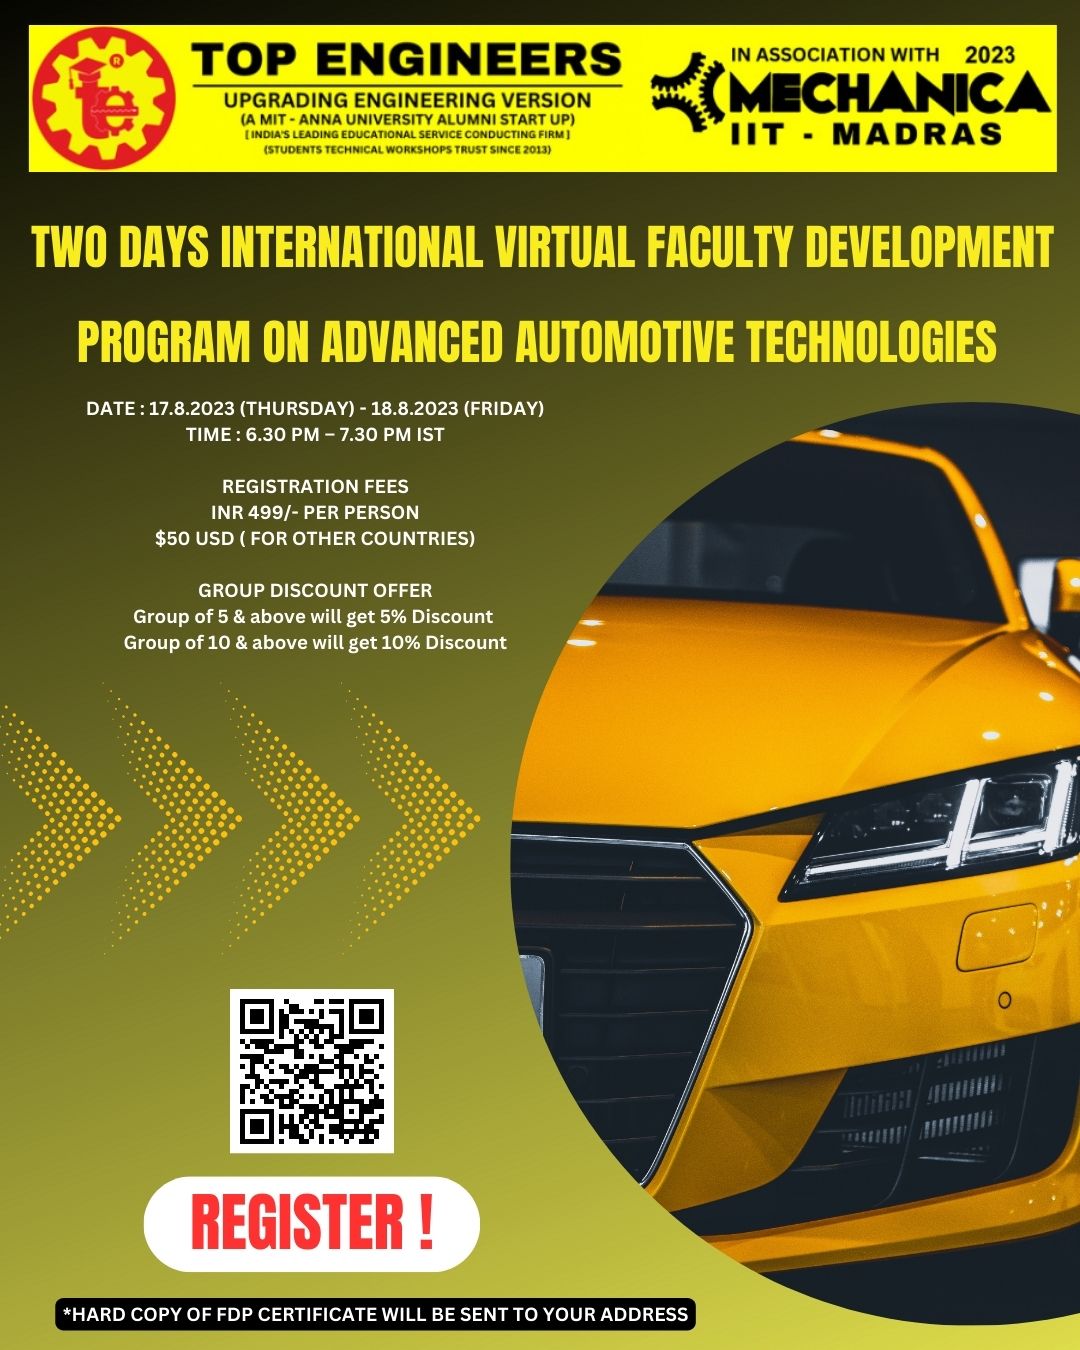 Two Days International Virtual Faculty Development Program on Advanced Automotive Technologies 2023